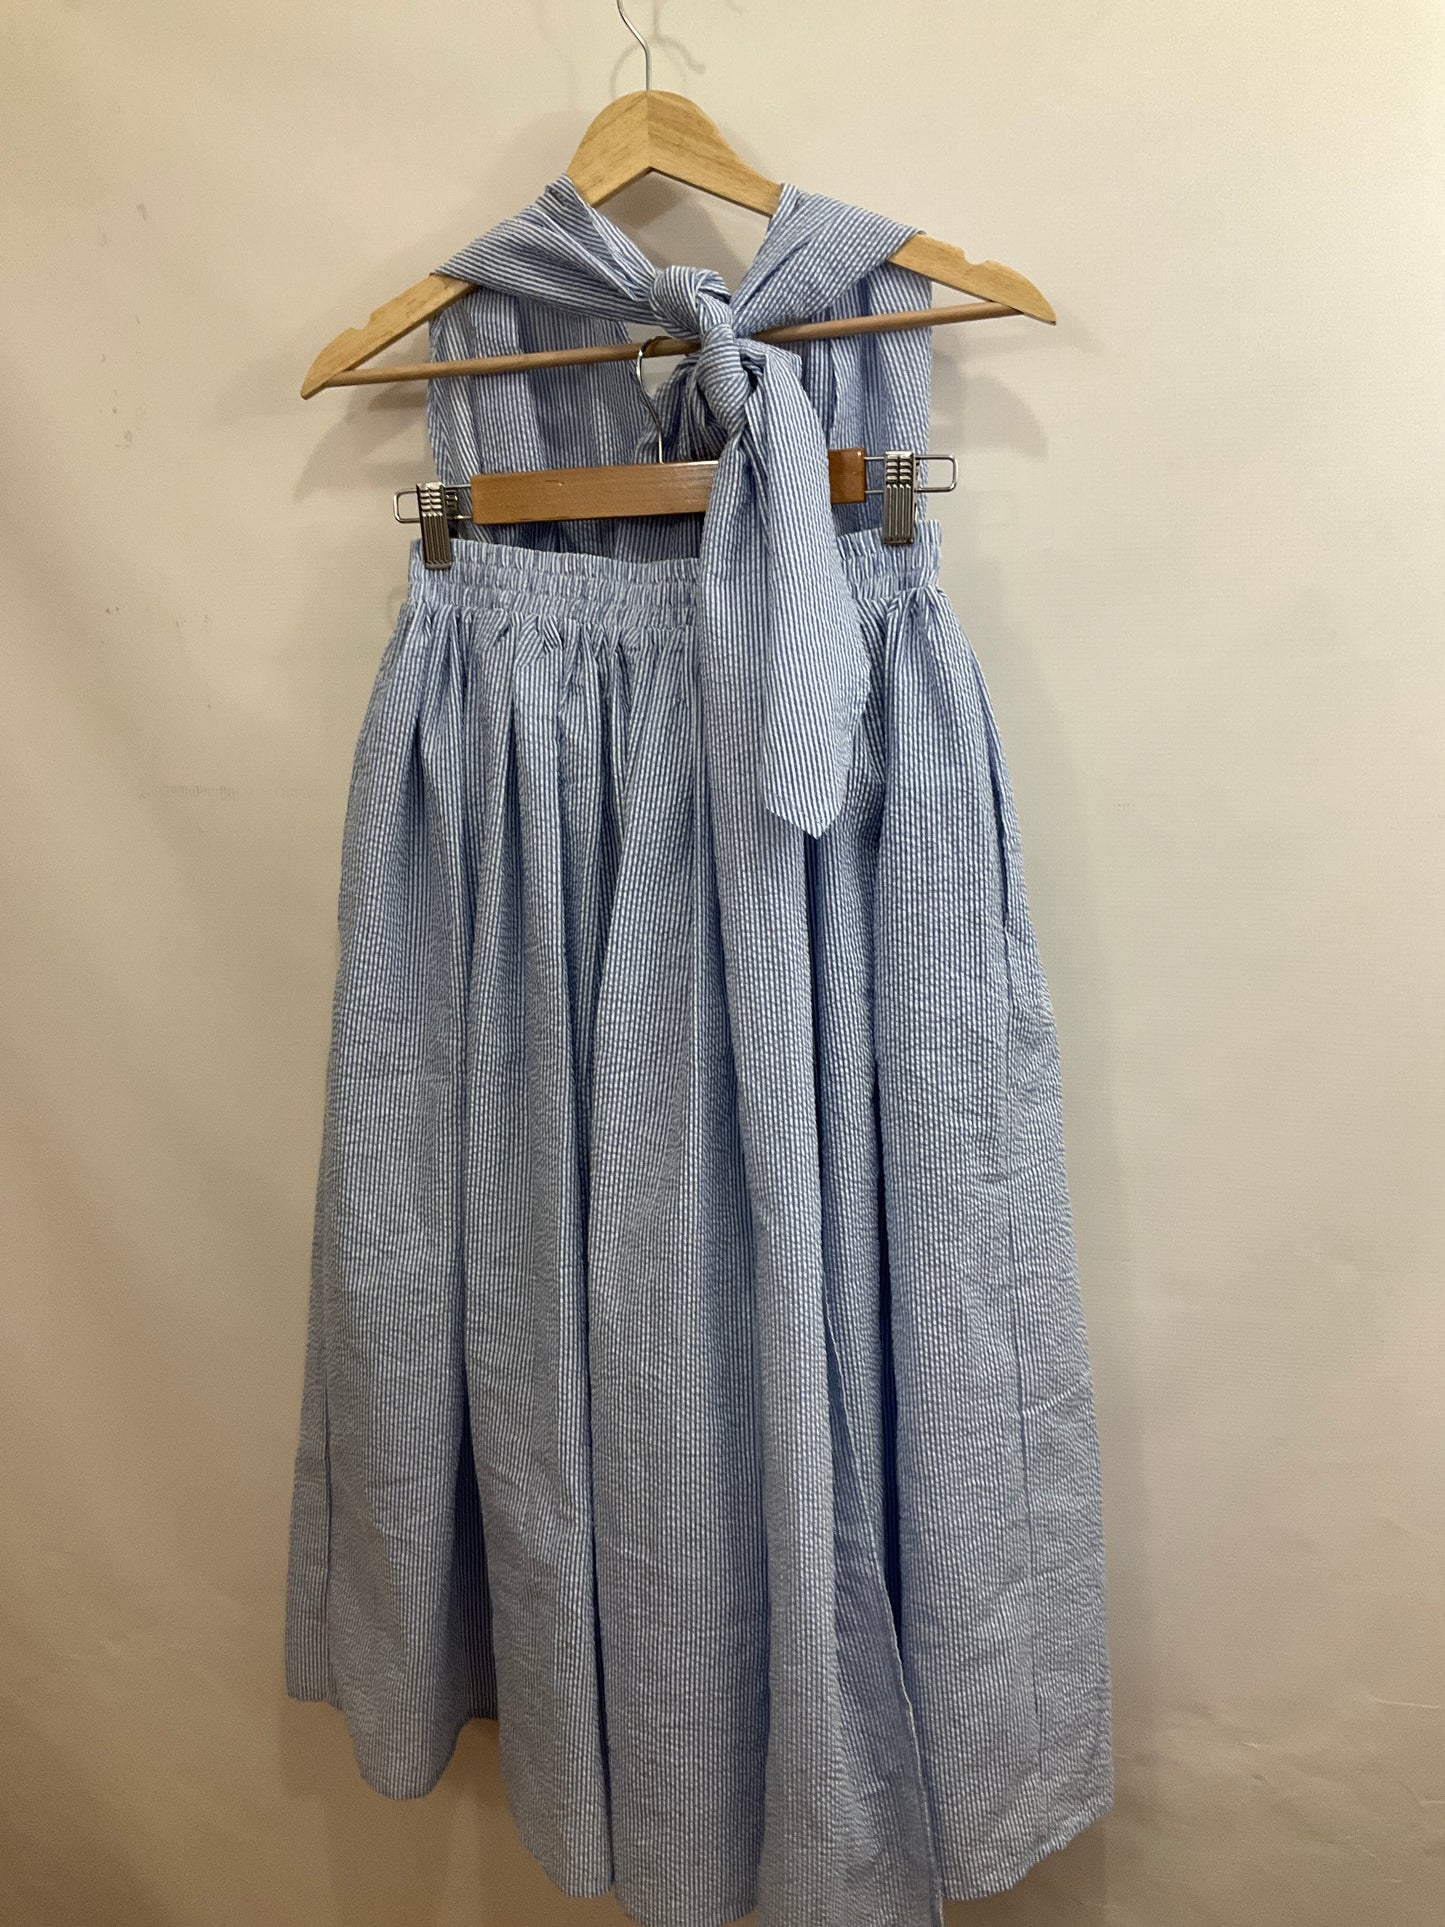 Dress Set 2pc By Clothes Mentor  Size: M